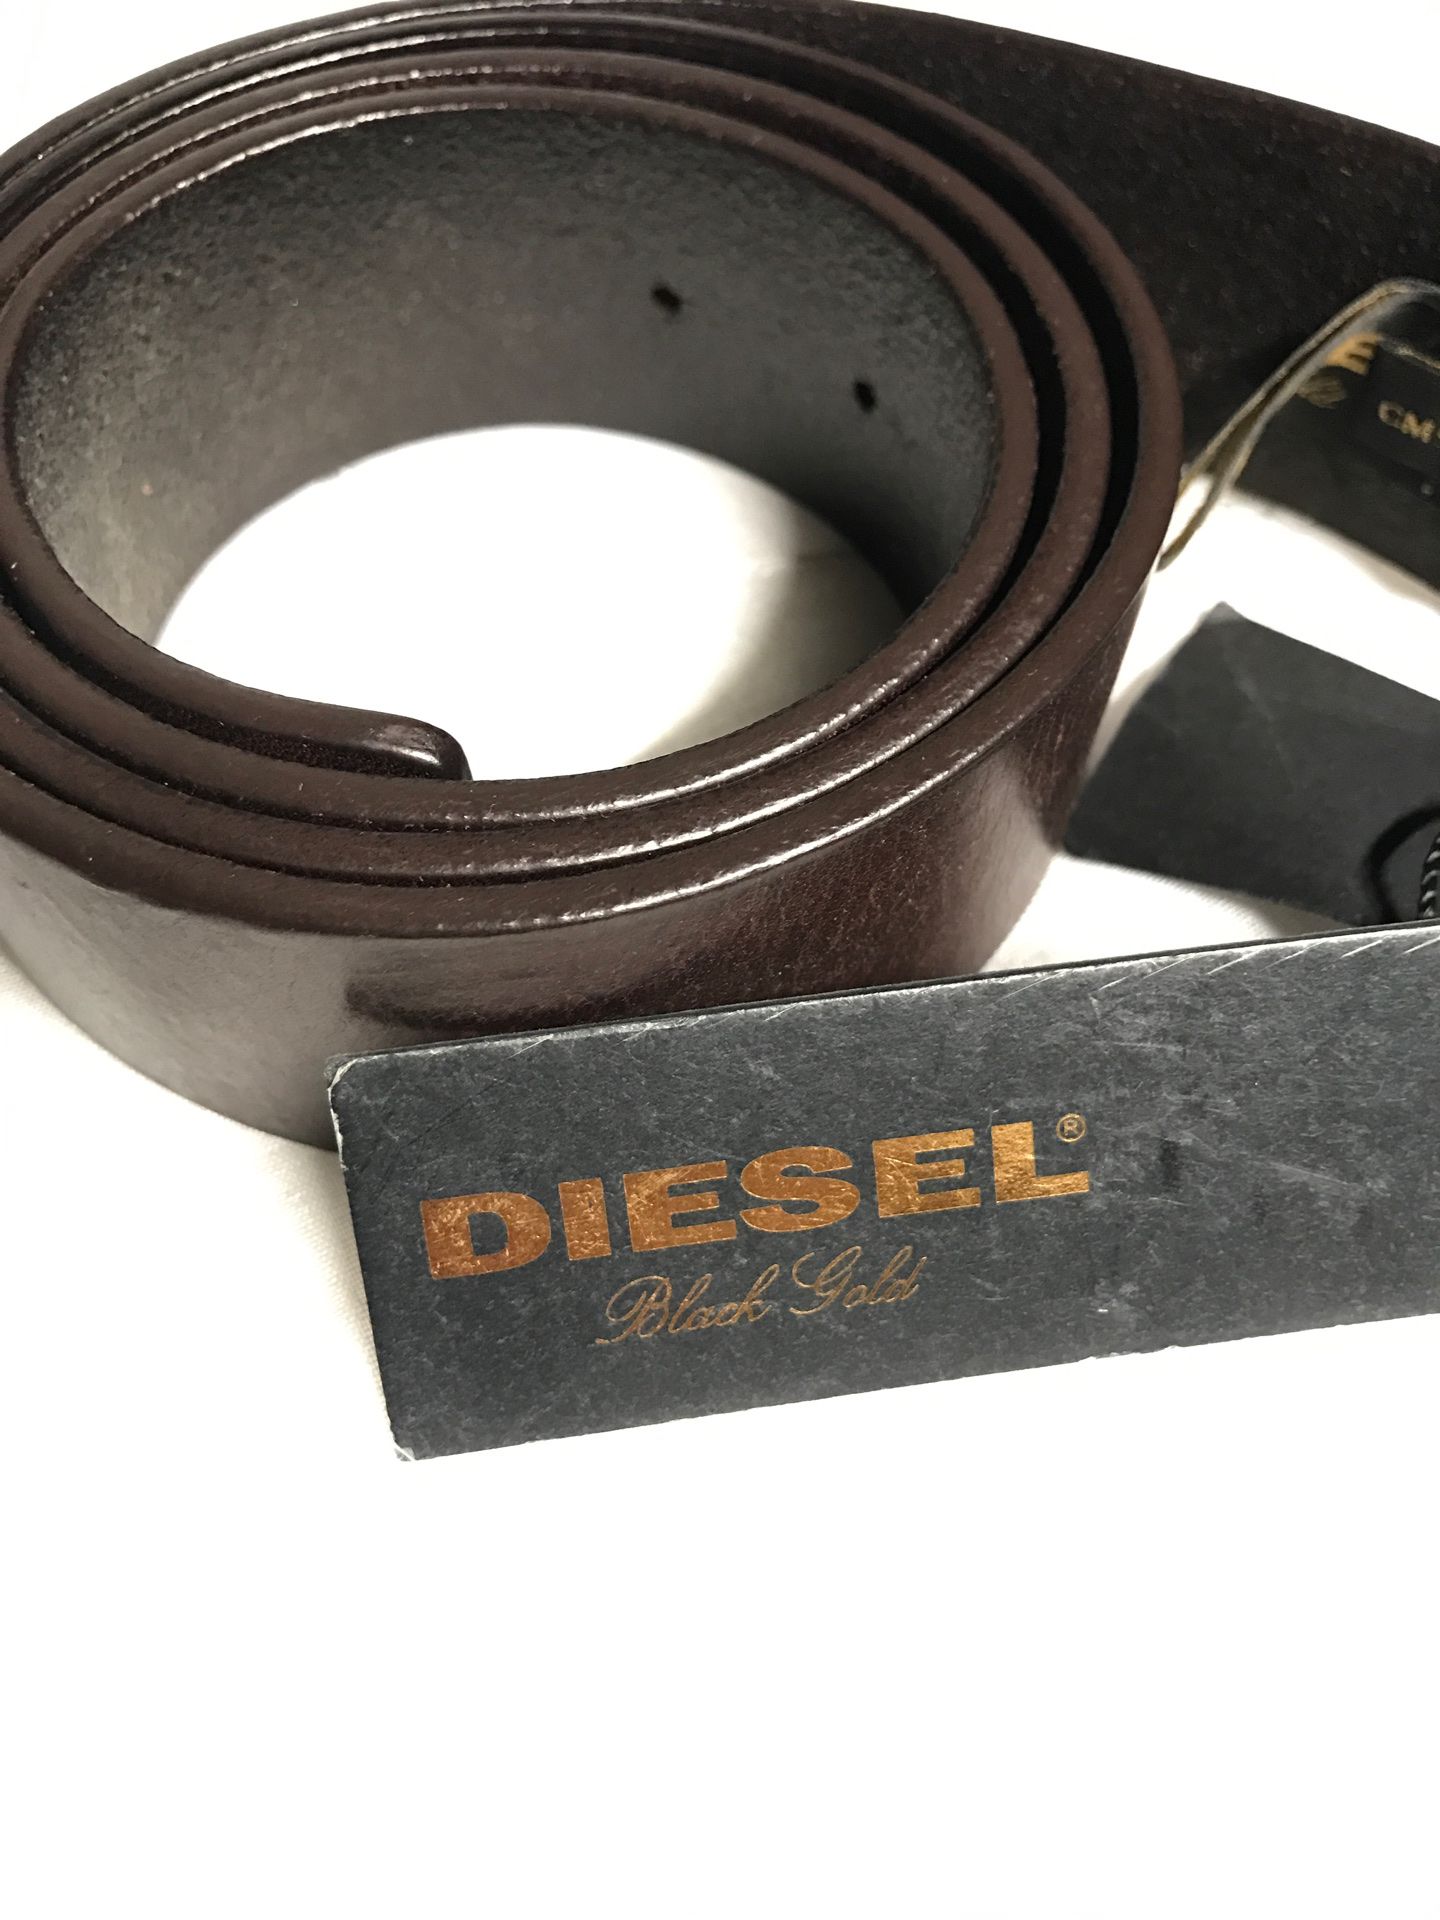 DIESEL BELT -ITALY 💯% Leather